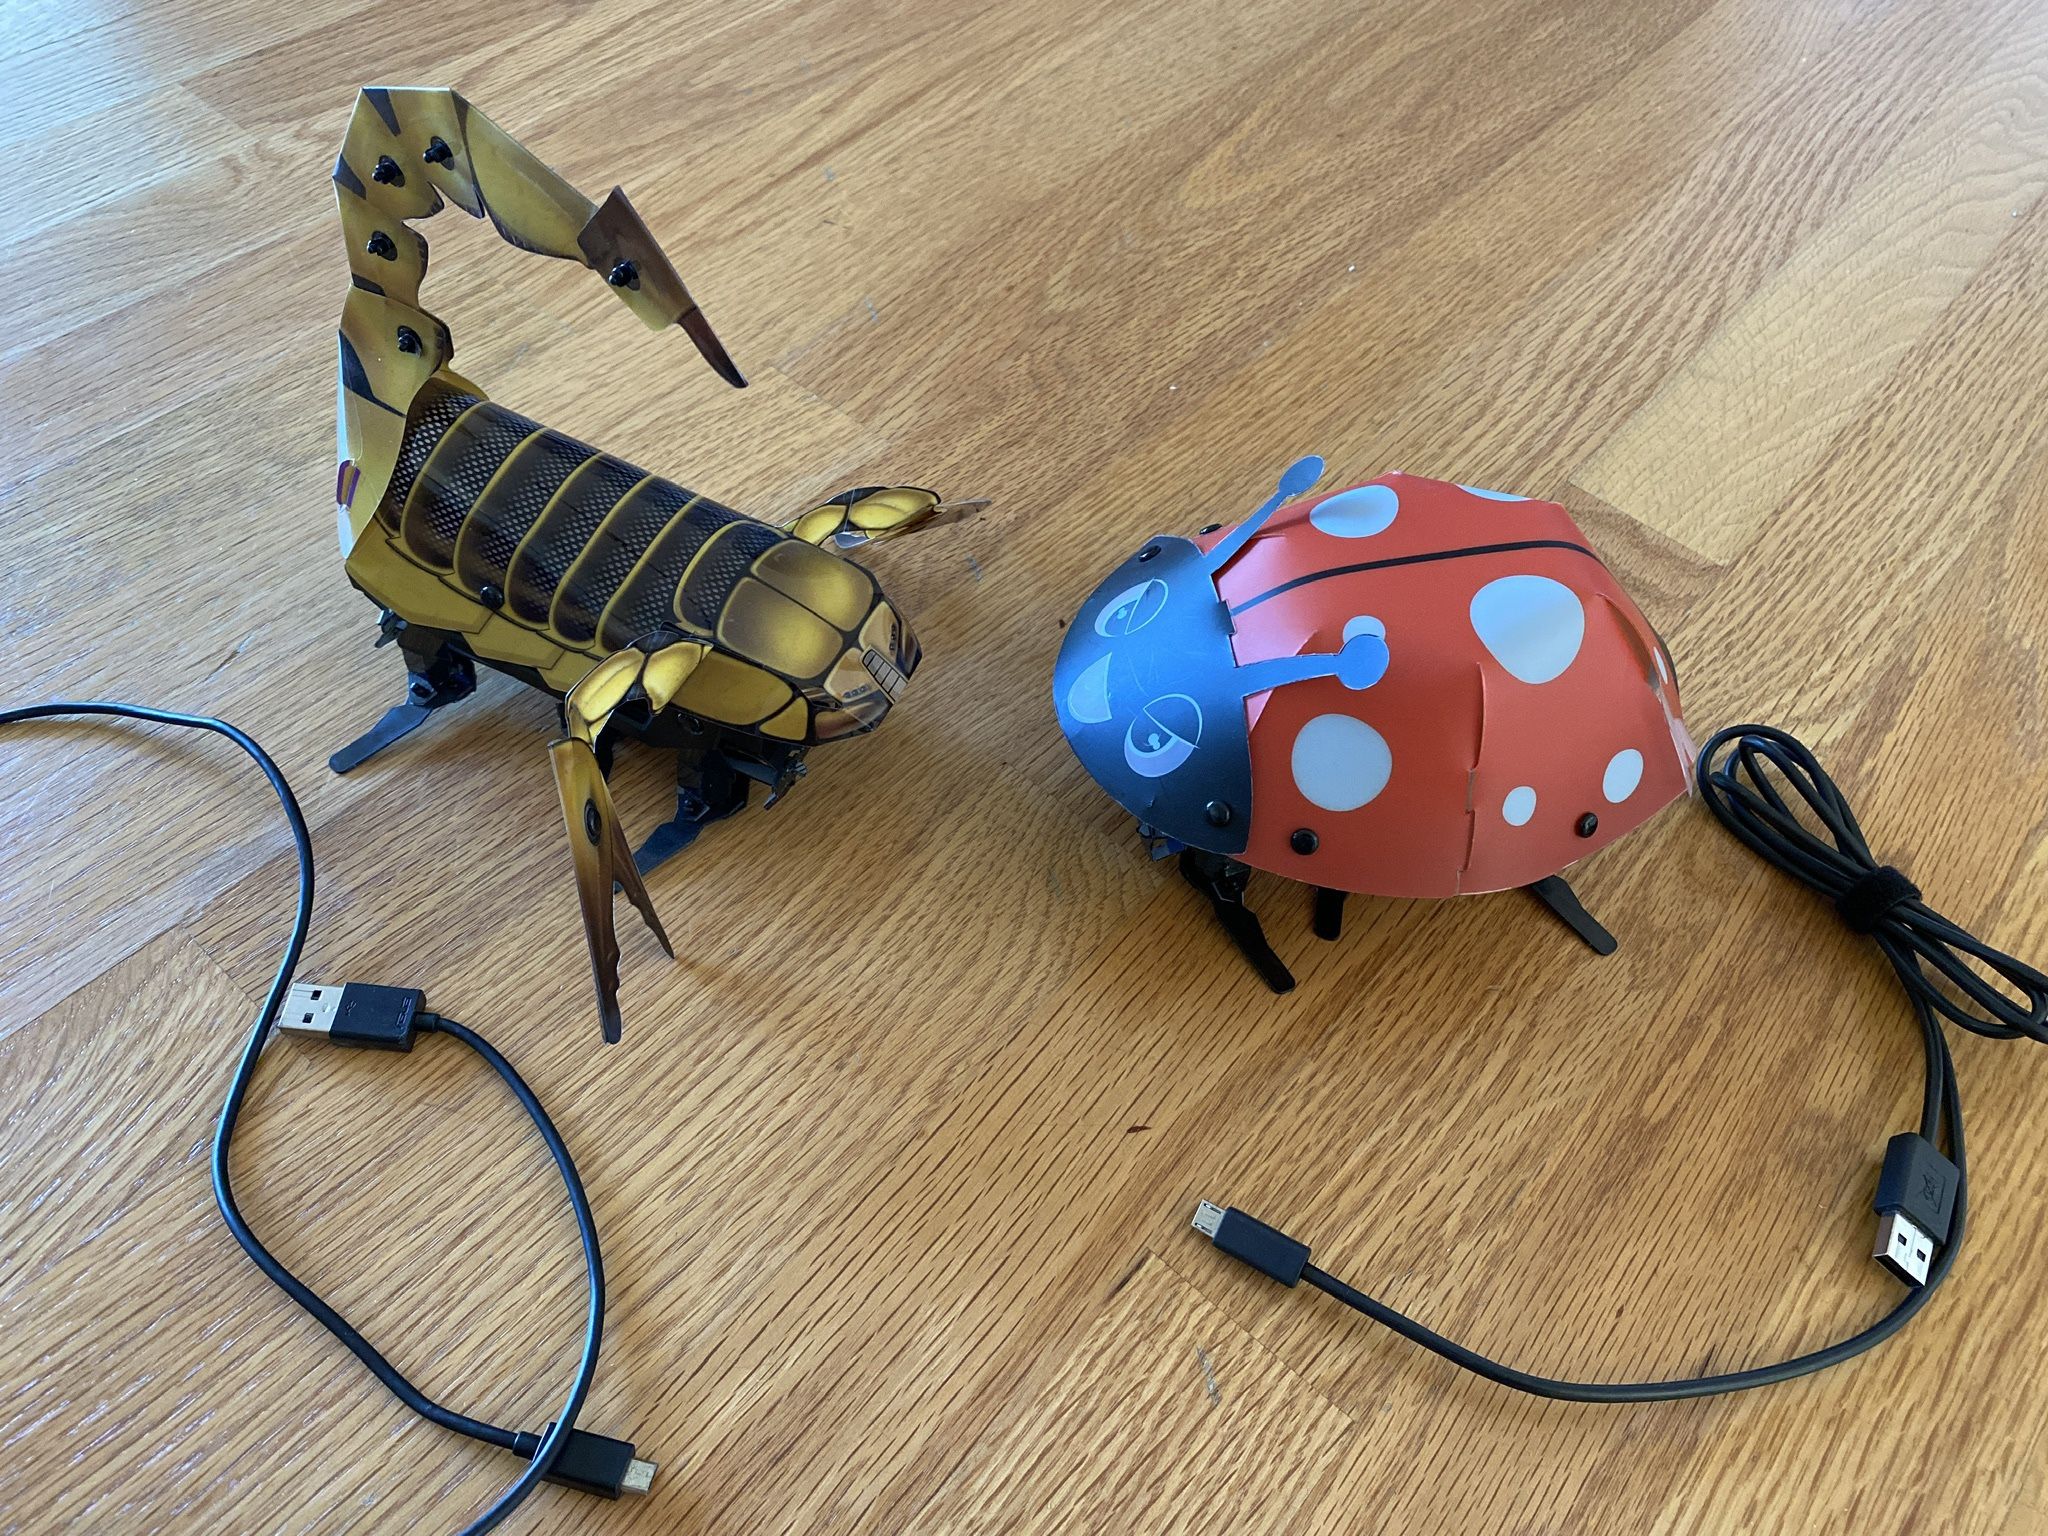 STEM kids’ toy (2) Kamigami robots (Scarrax and Lina Ladybug) by Mattel remote control children